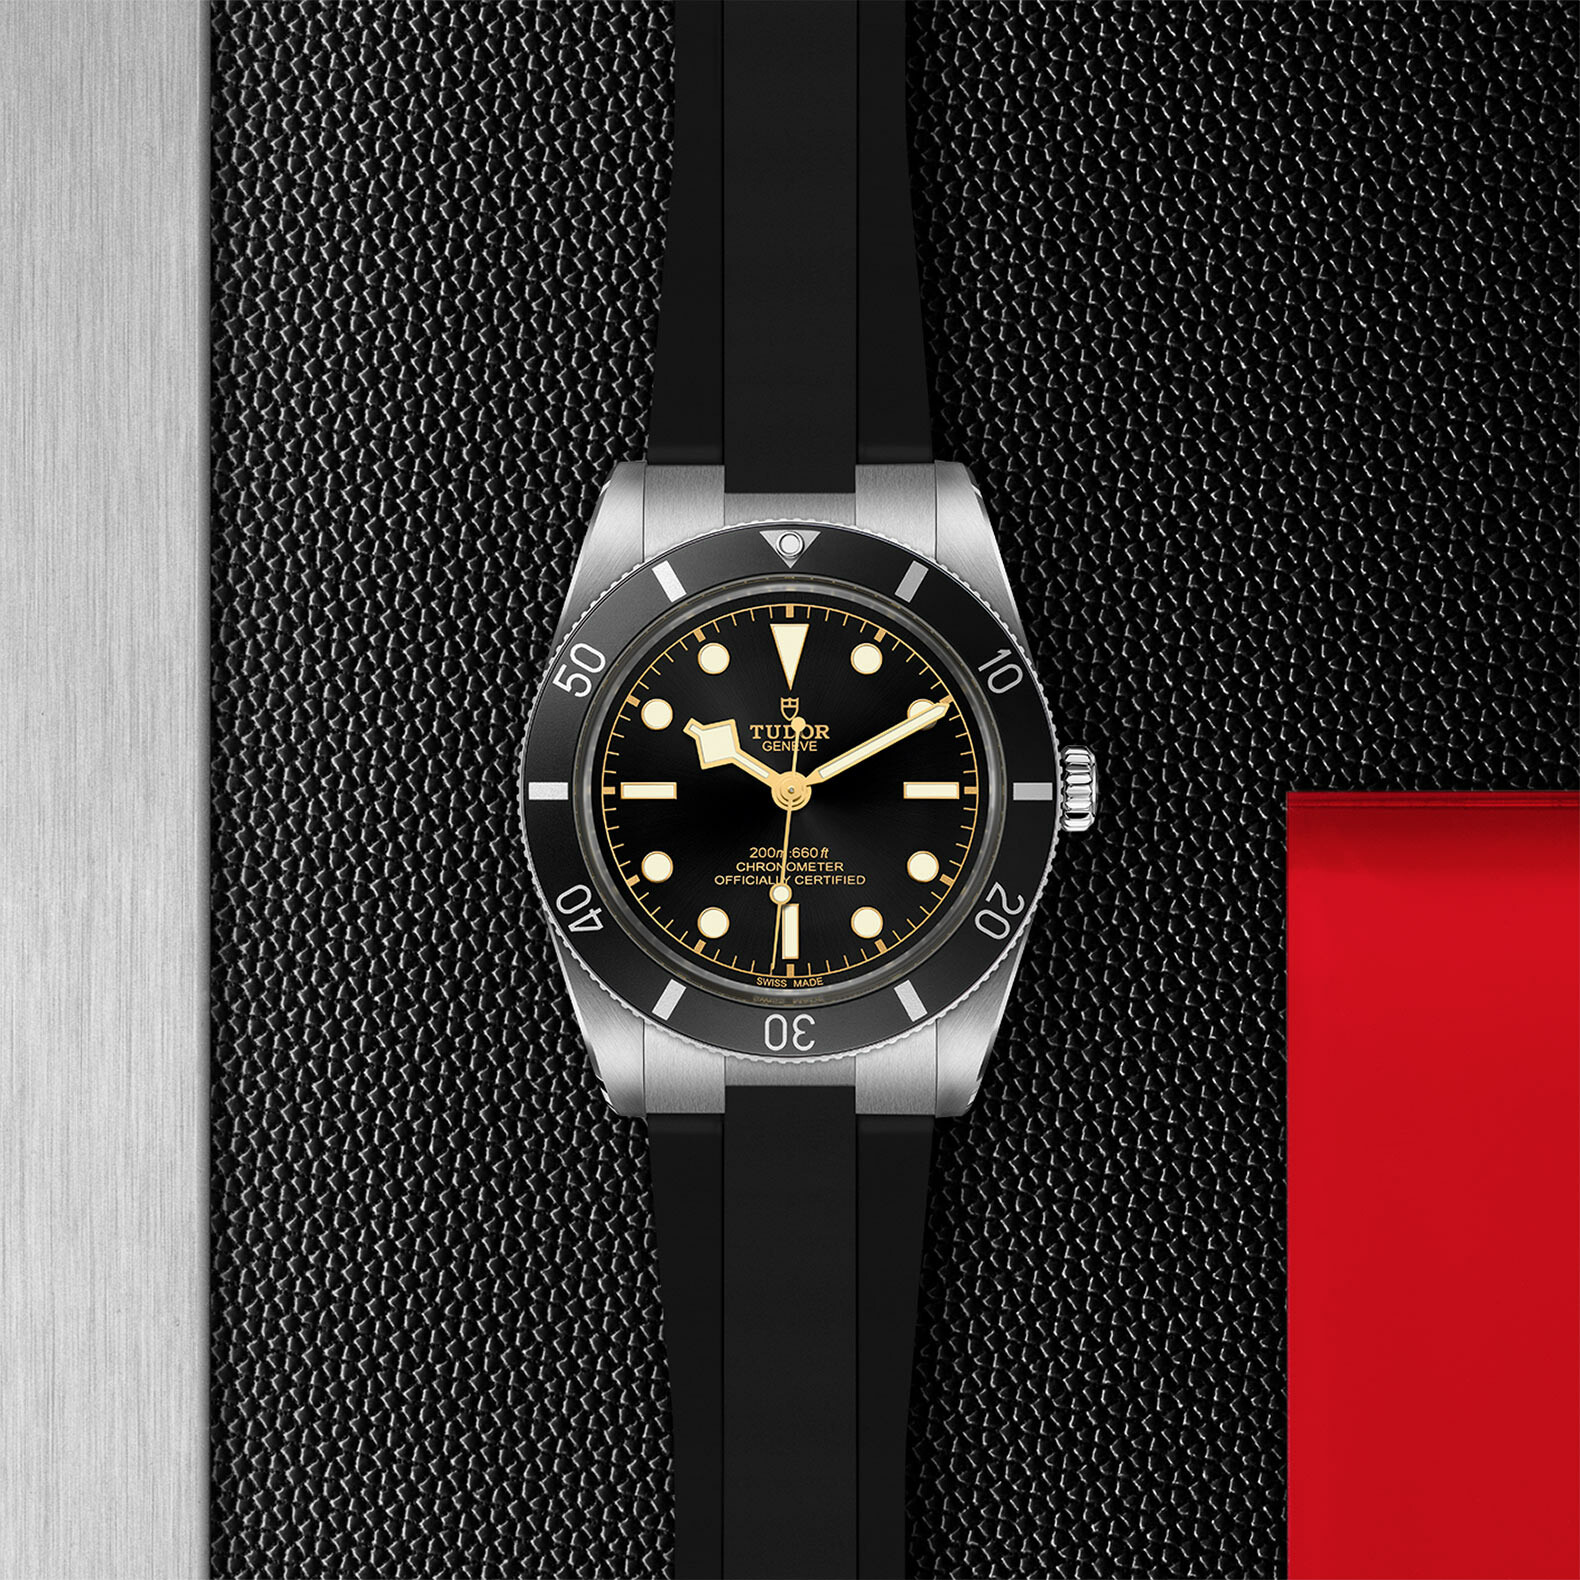 Purchase TUDOR Black Bay 54 watch, 37mm steel case, Black rubber strap